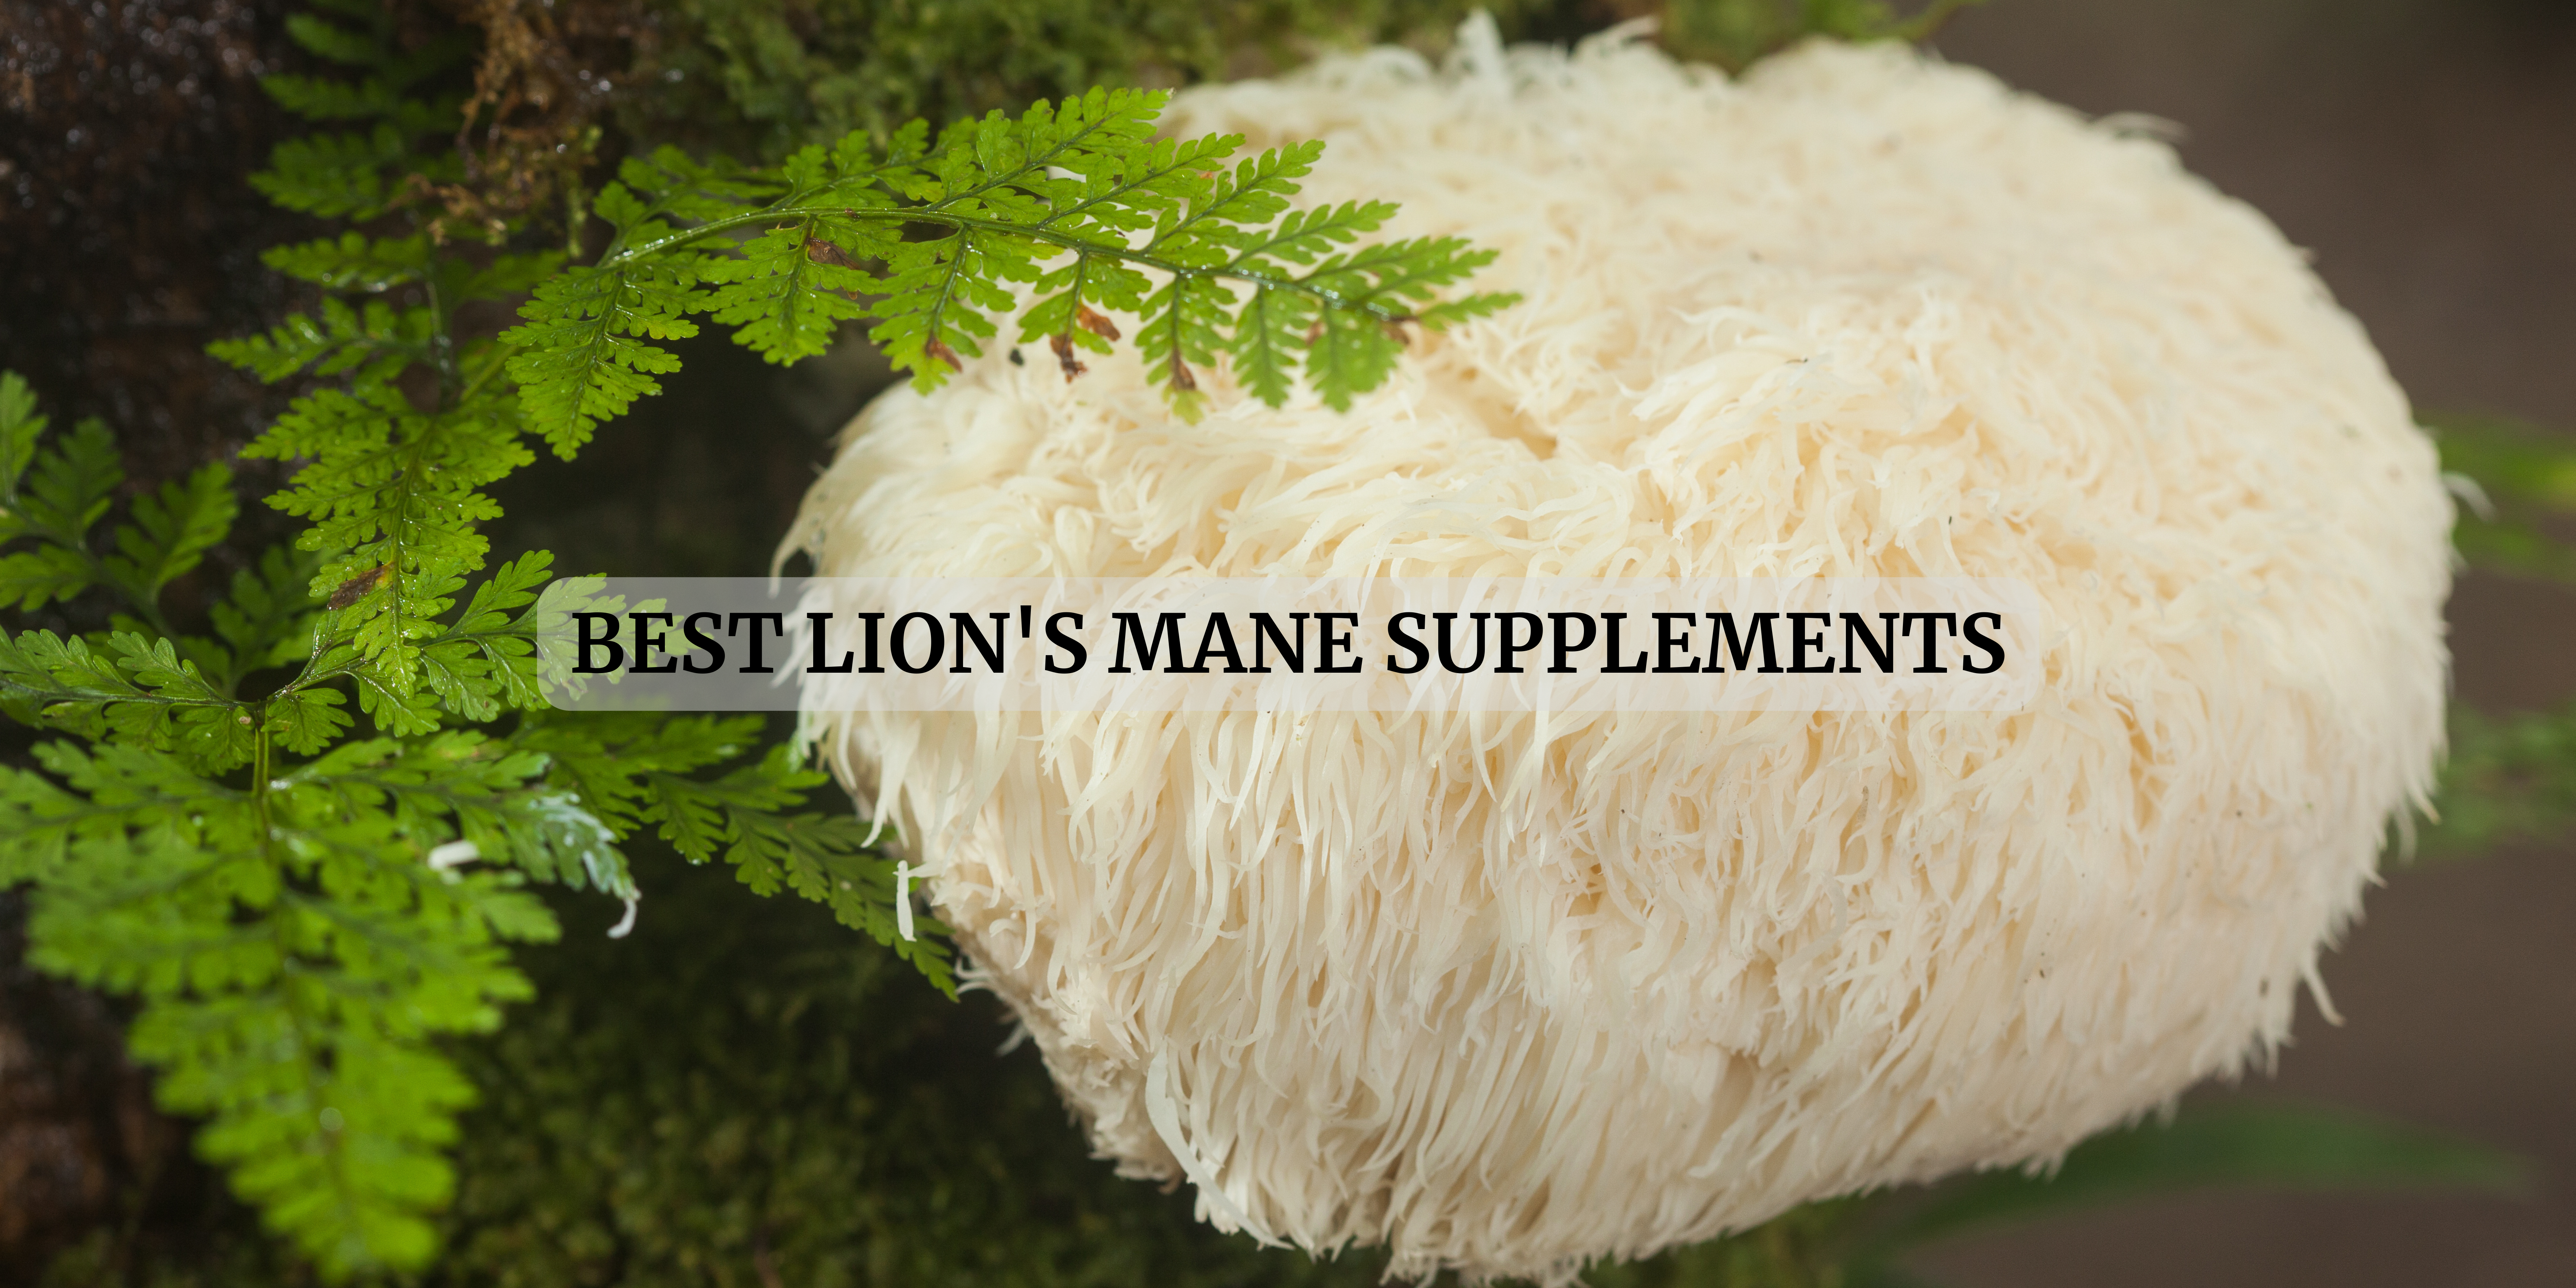 lion's mane supplements in UK